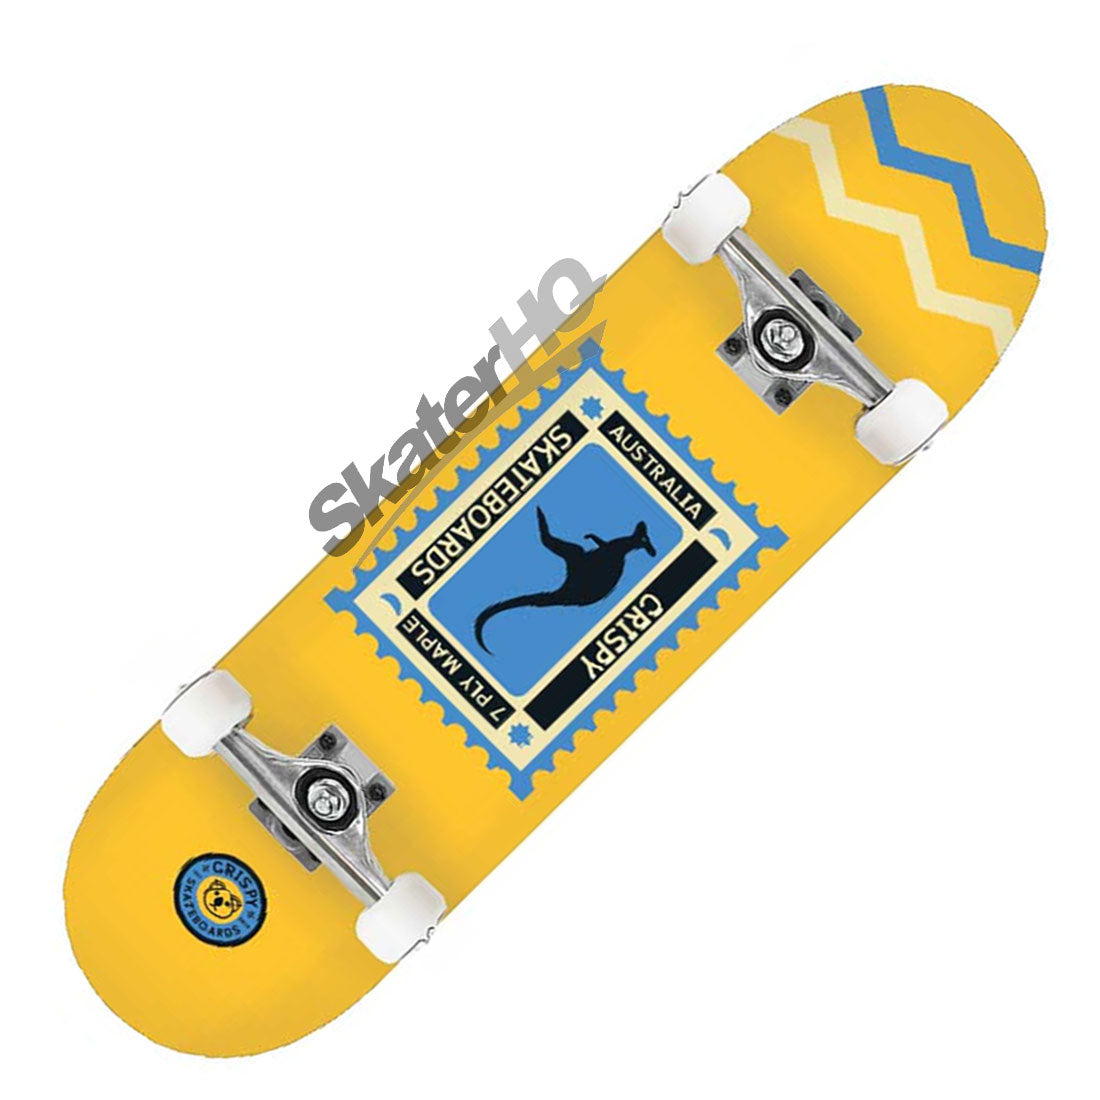 Crispy Rookie Roo 7.25 Mini Complete - Yellow Skateboard Completes Modern Street